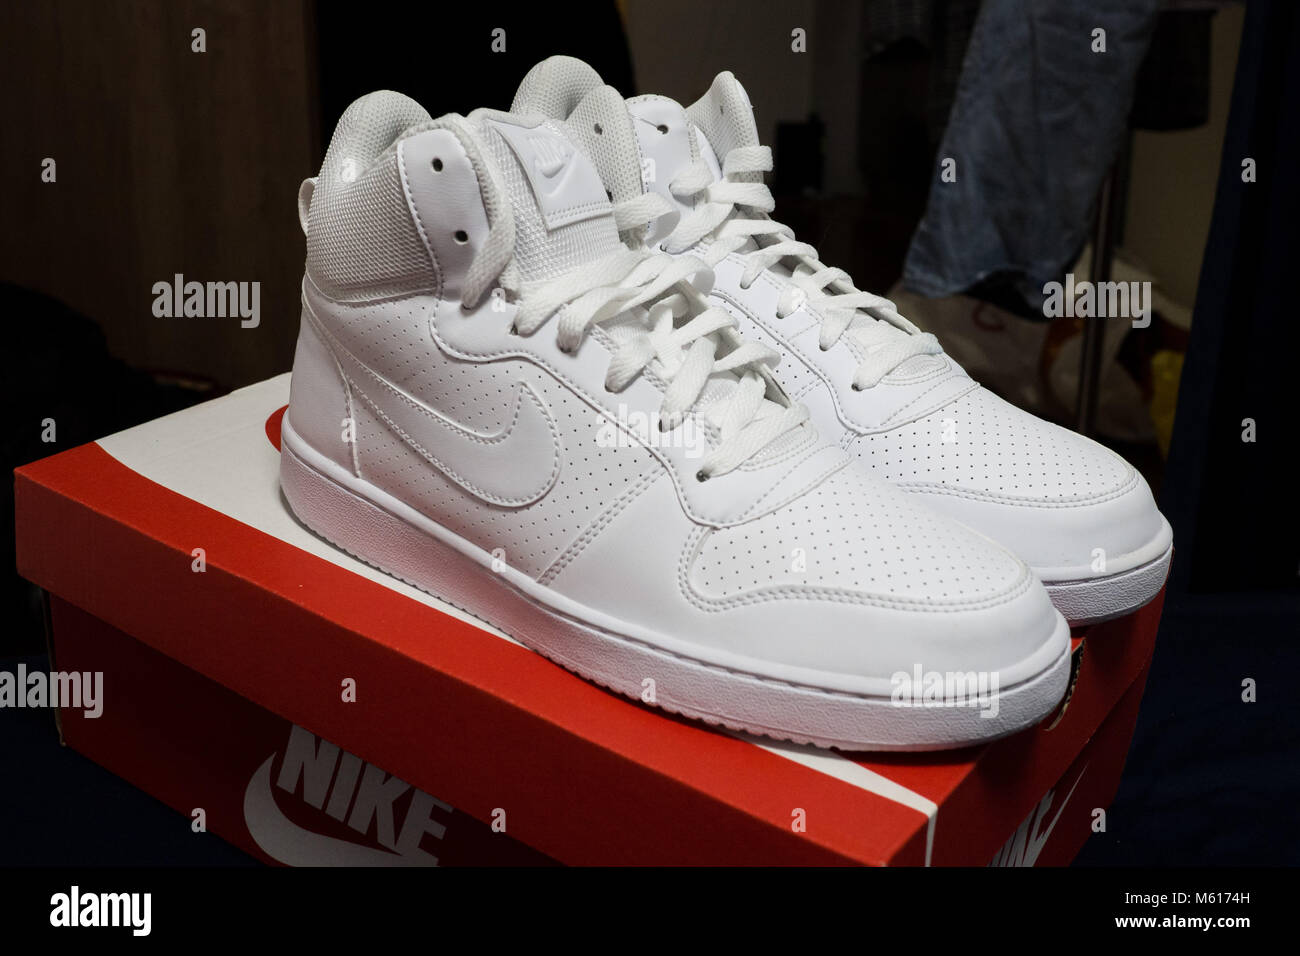 Nuovo di zecca scarpe Nike fresco della scatola. Red Nike Walkers, Bianco  Nike Hi Tops Foto stock - Alamy